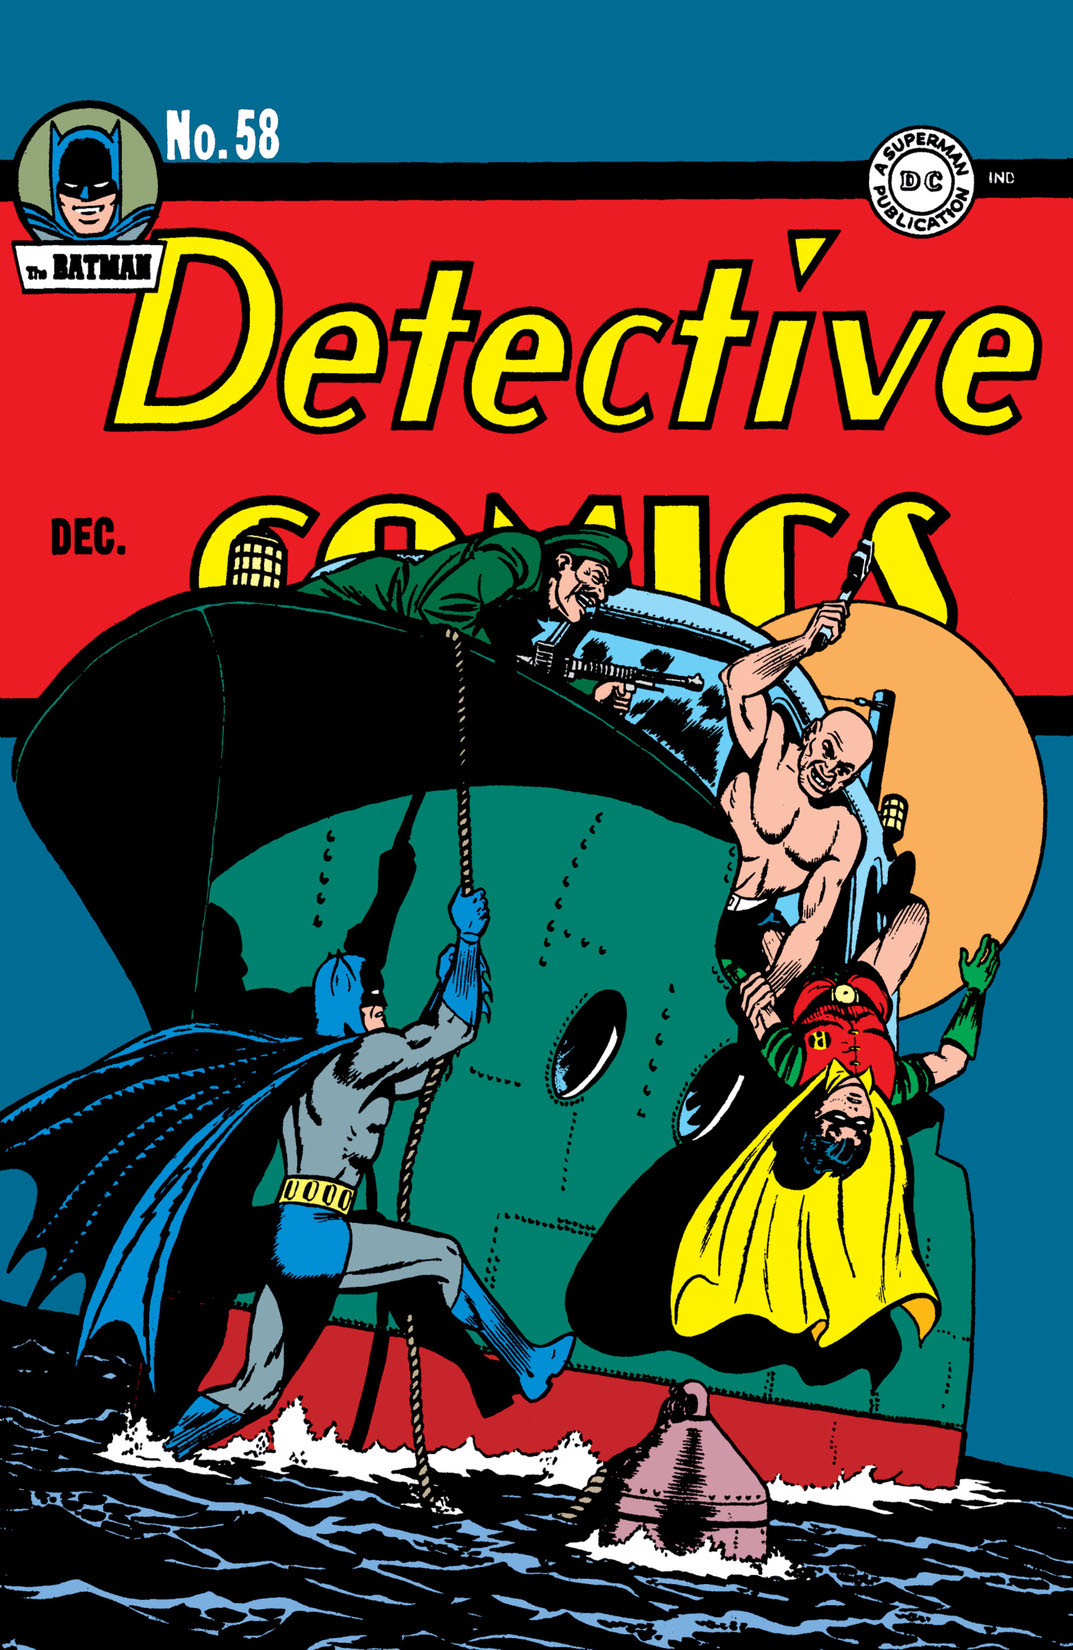 Detective Comics (1937-) #58 preview images